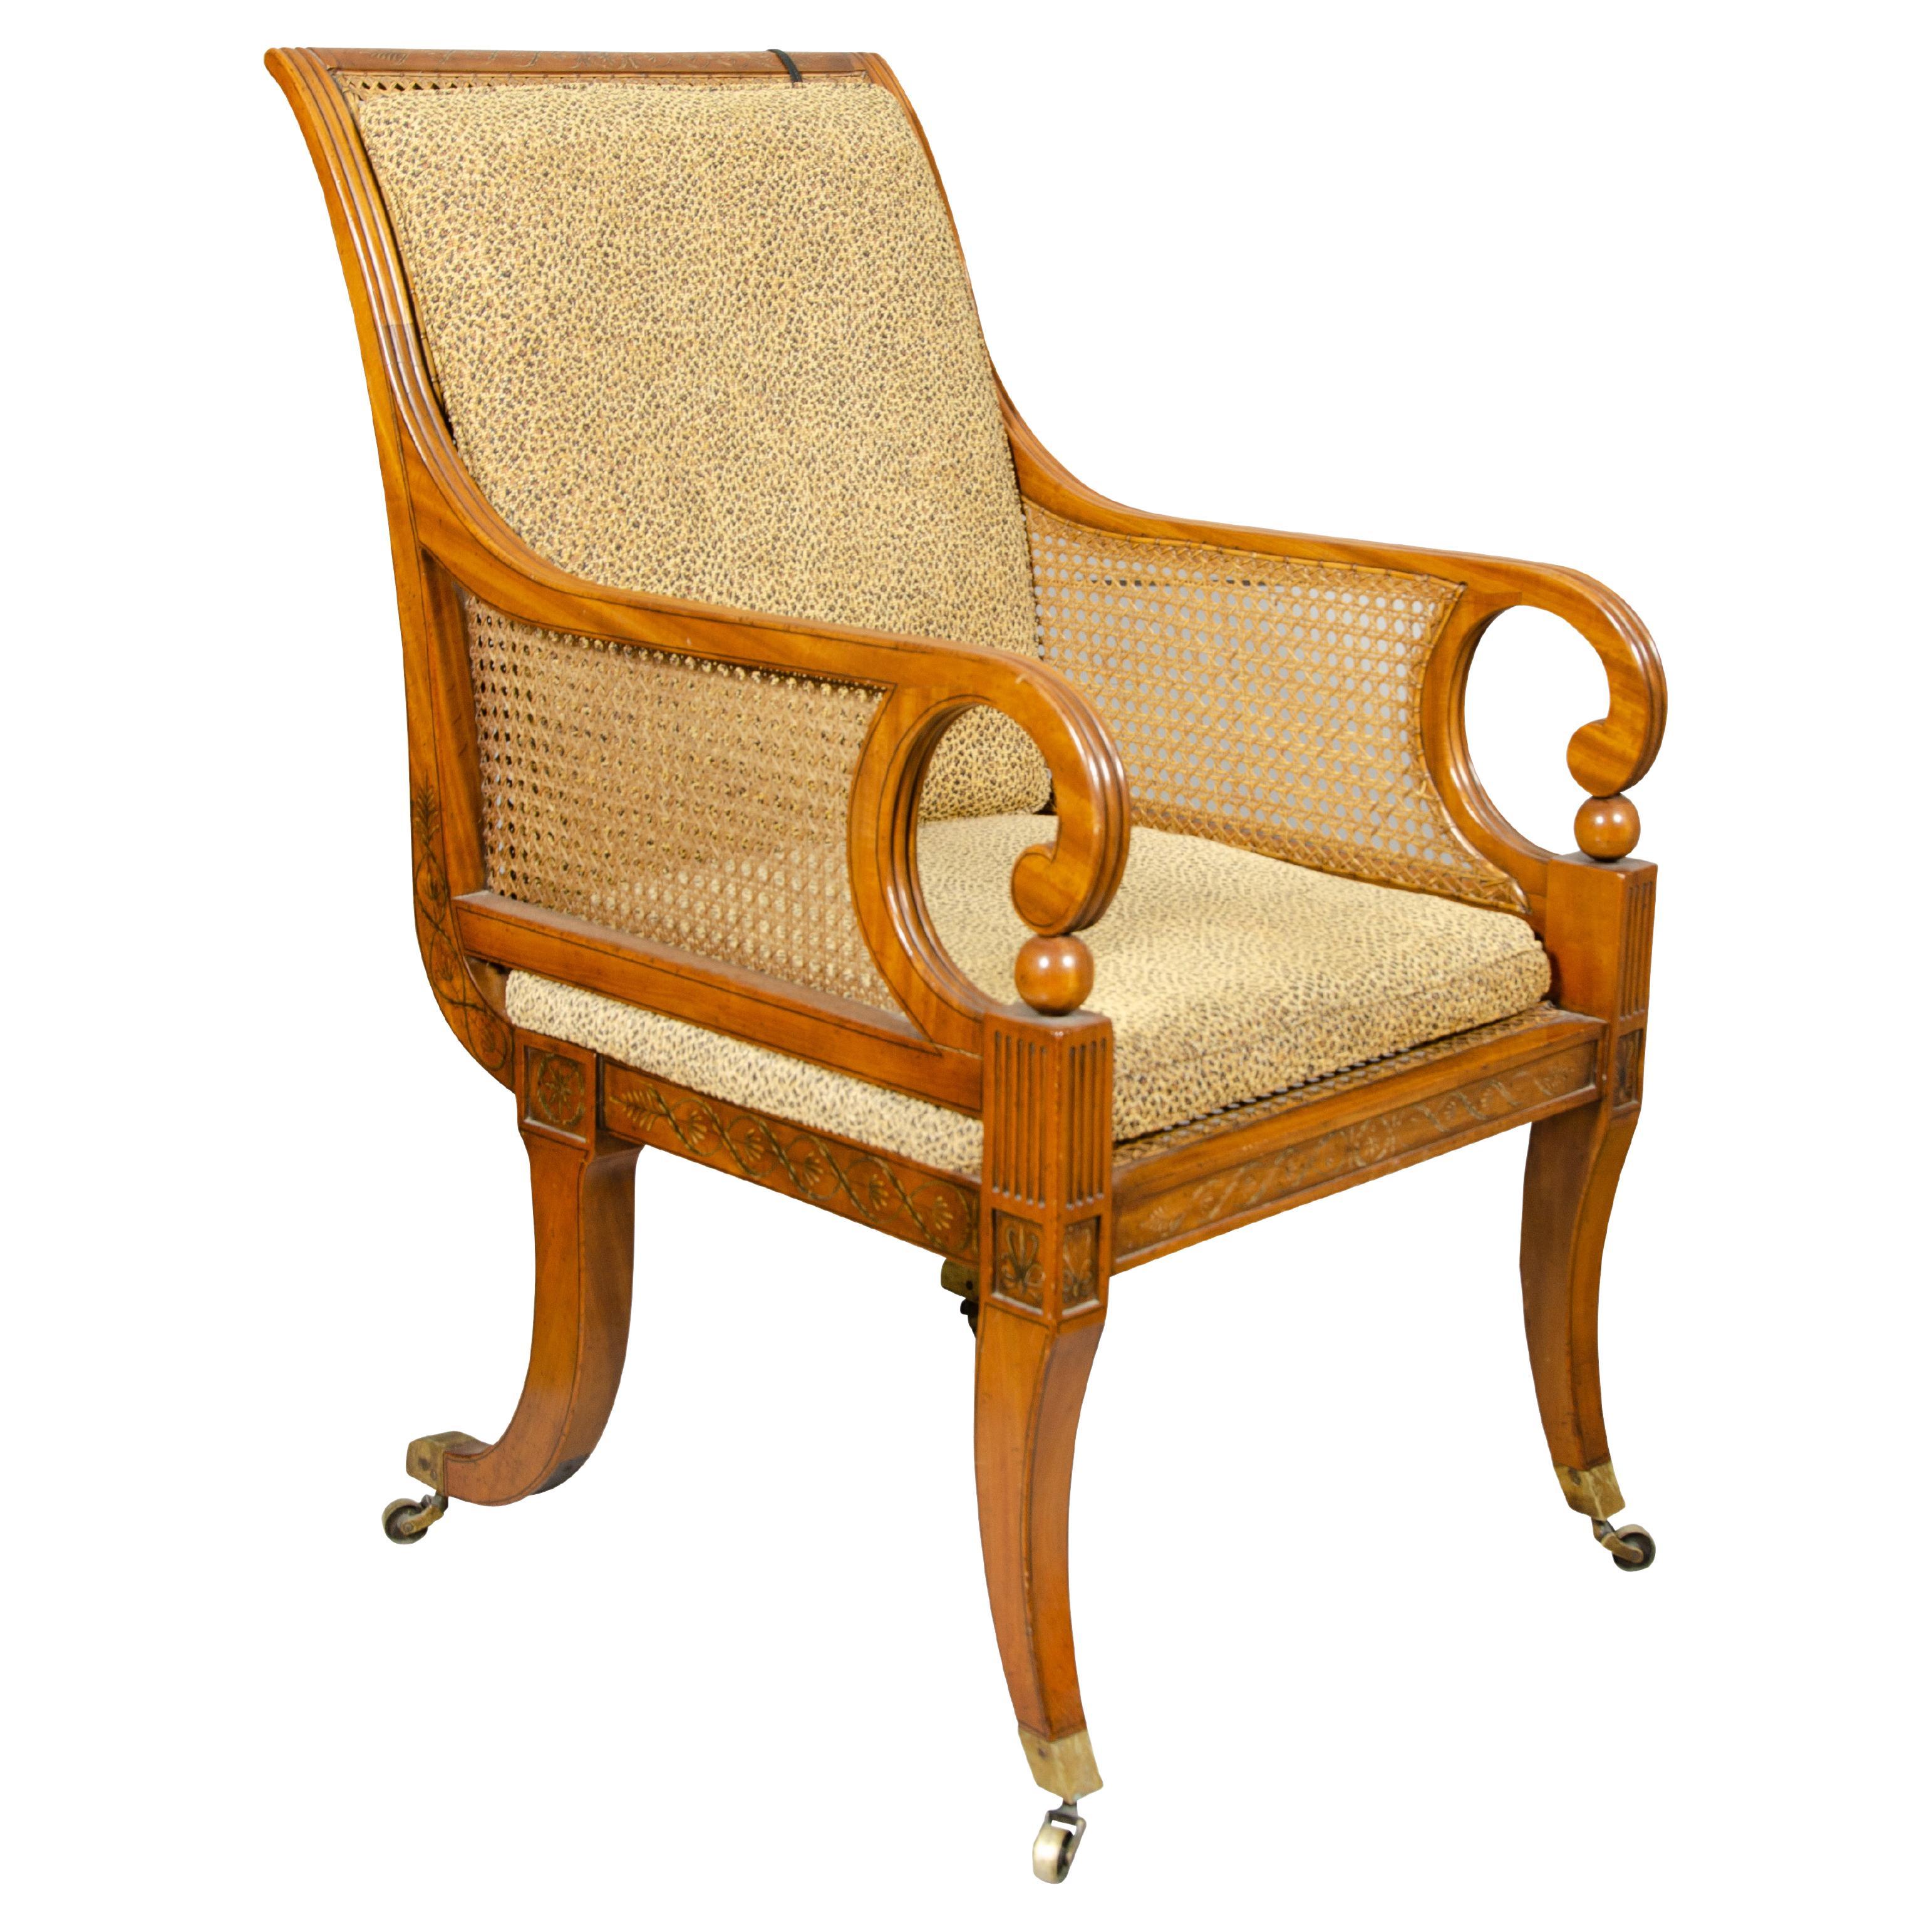 Sessel aus Seidenholz und lackiertem Lack im späten Regency-Stil